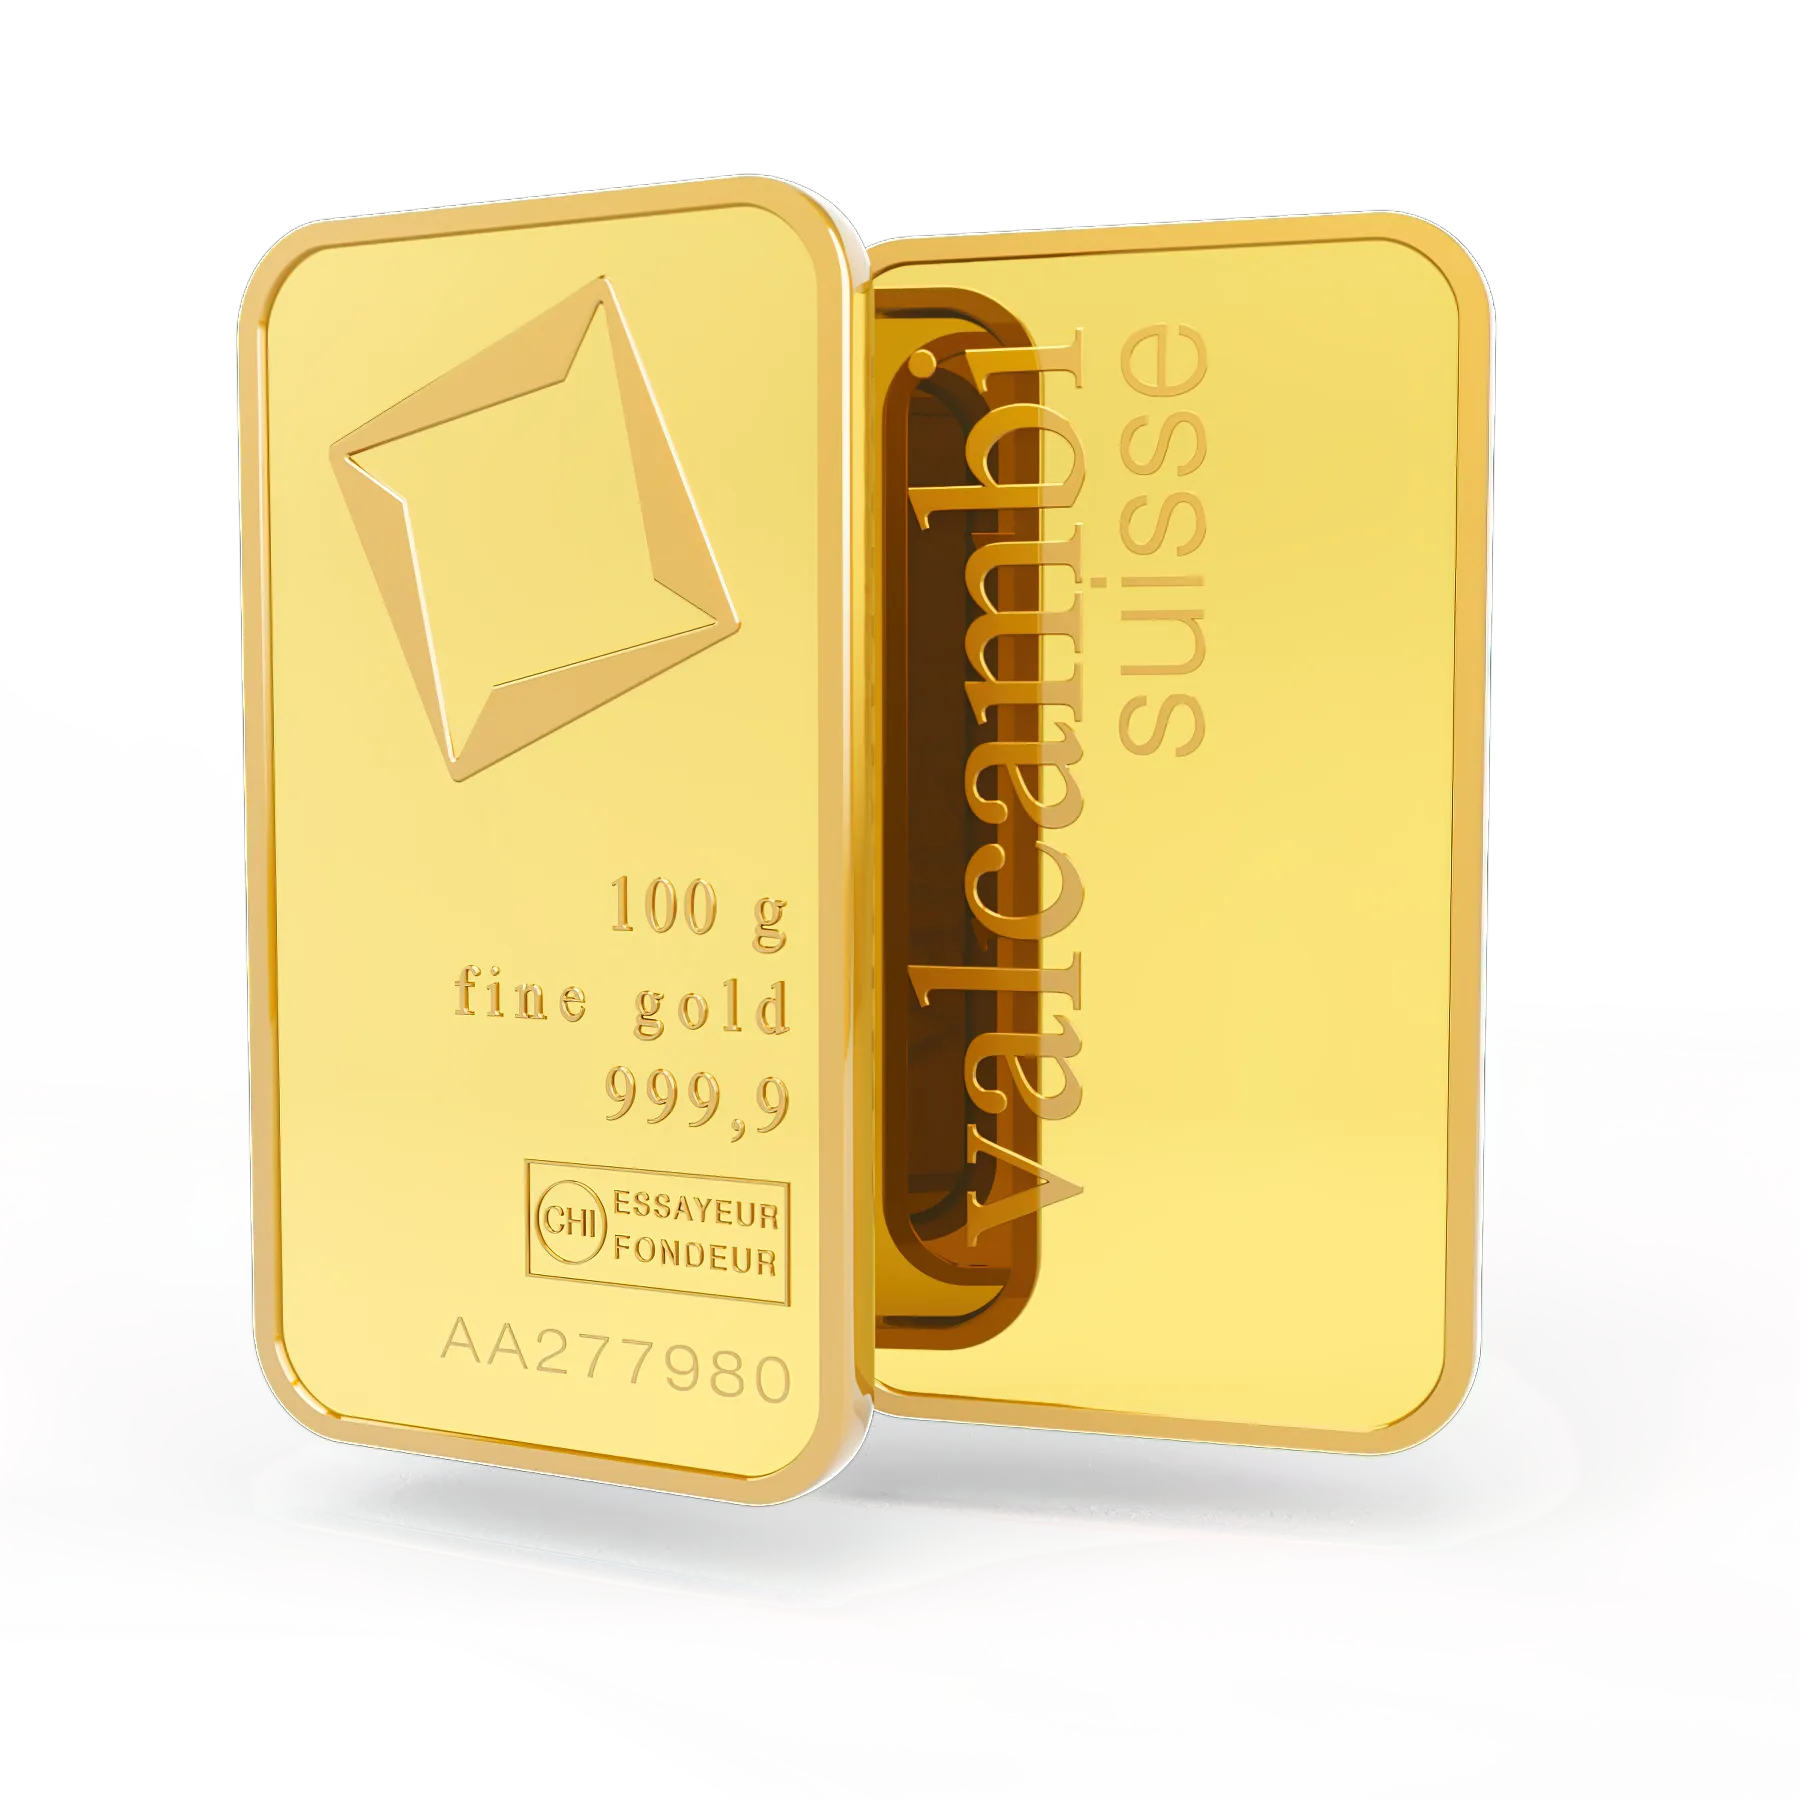 Aranyrúd 100gr, Svájc, Fine Gold 999,9